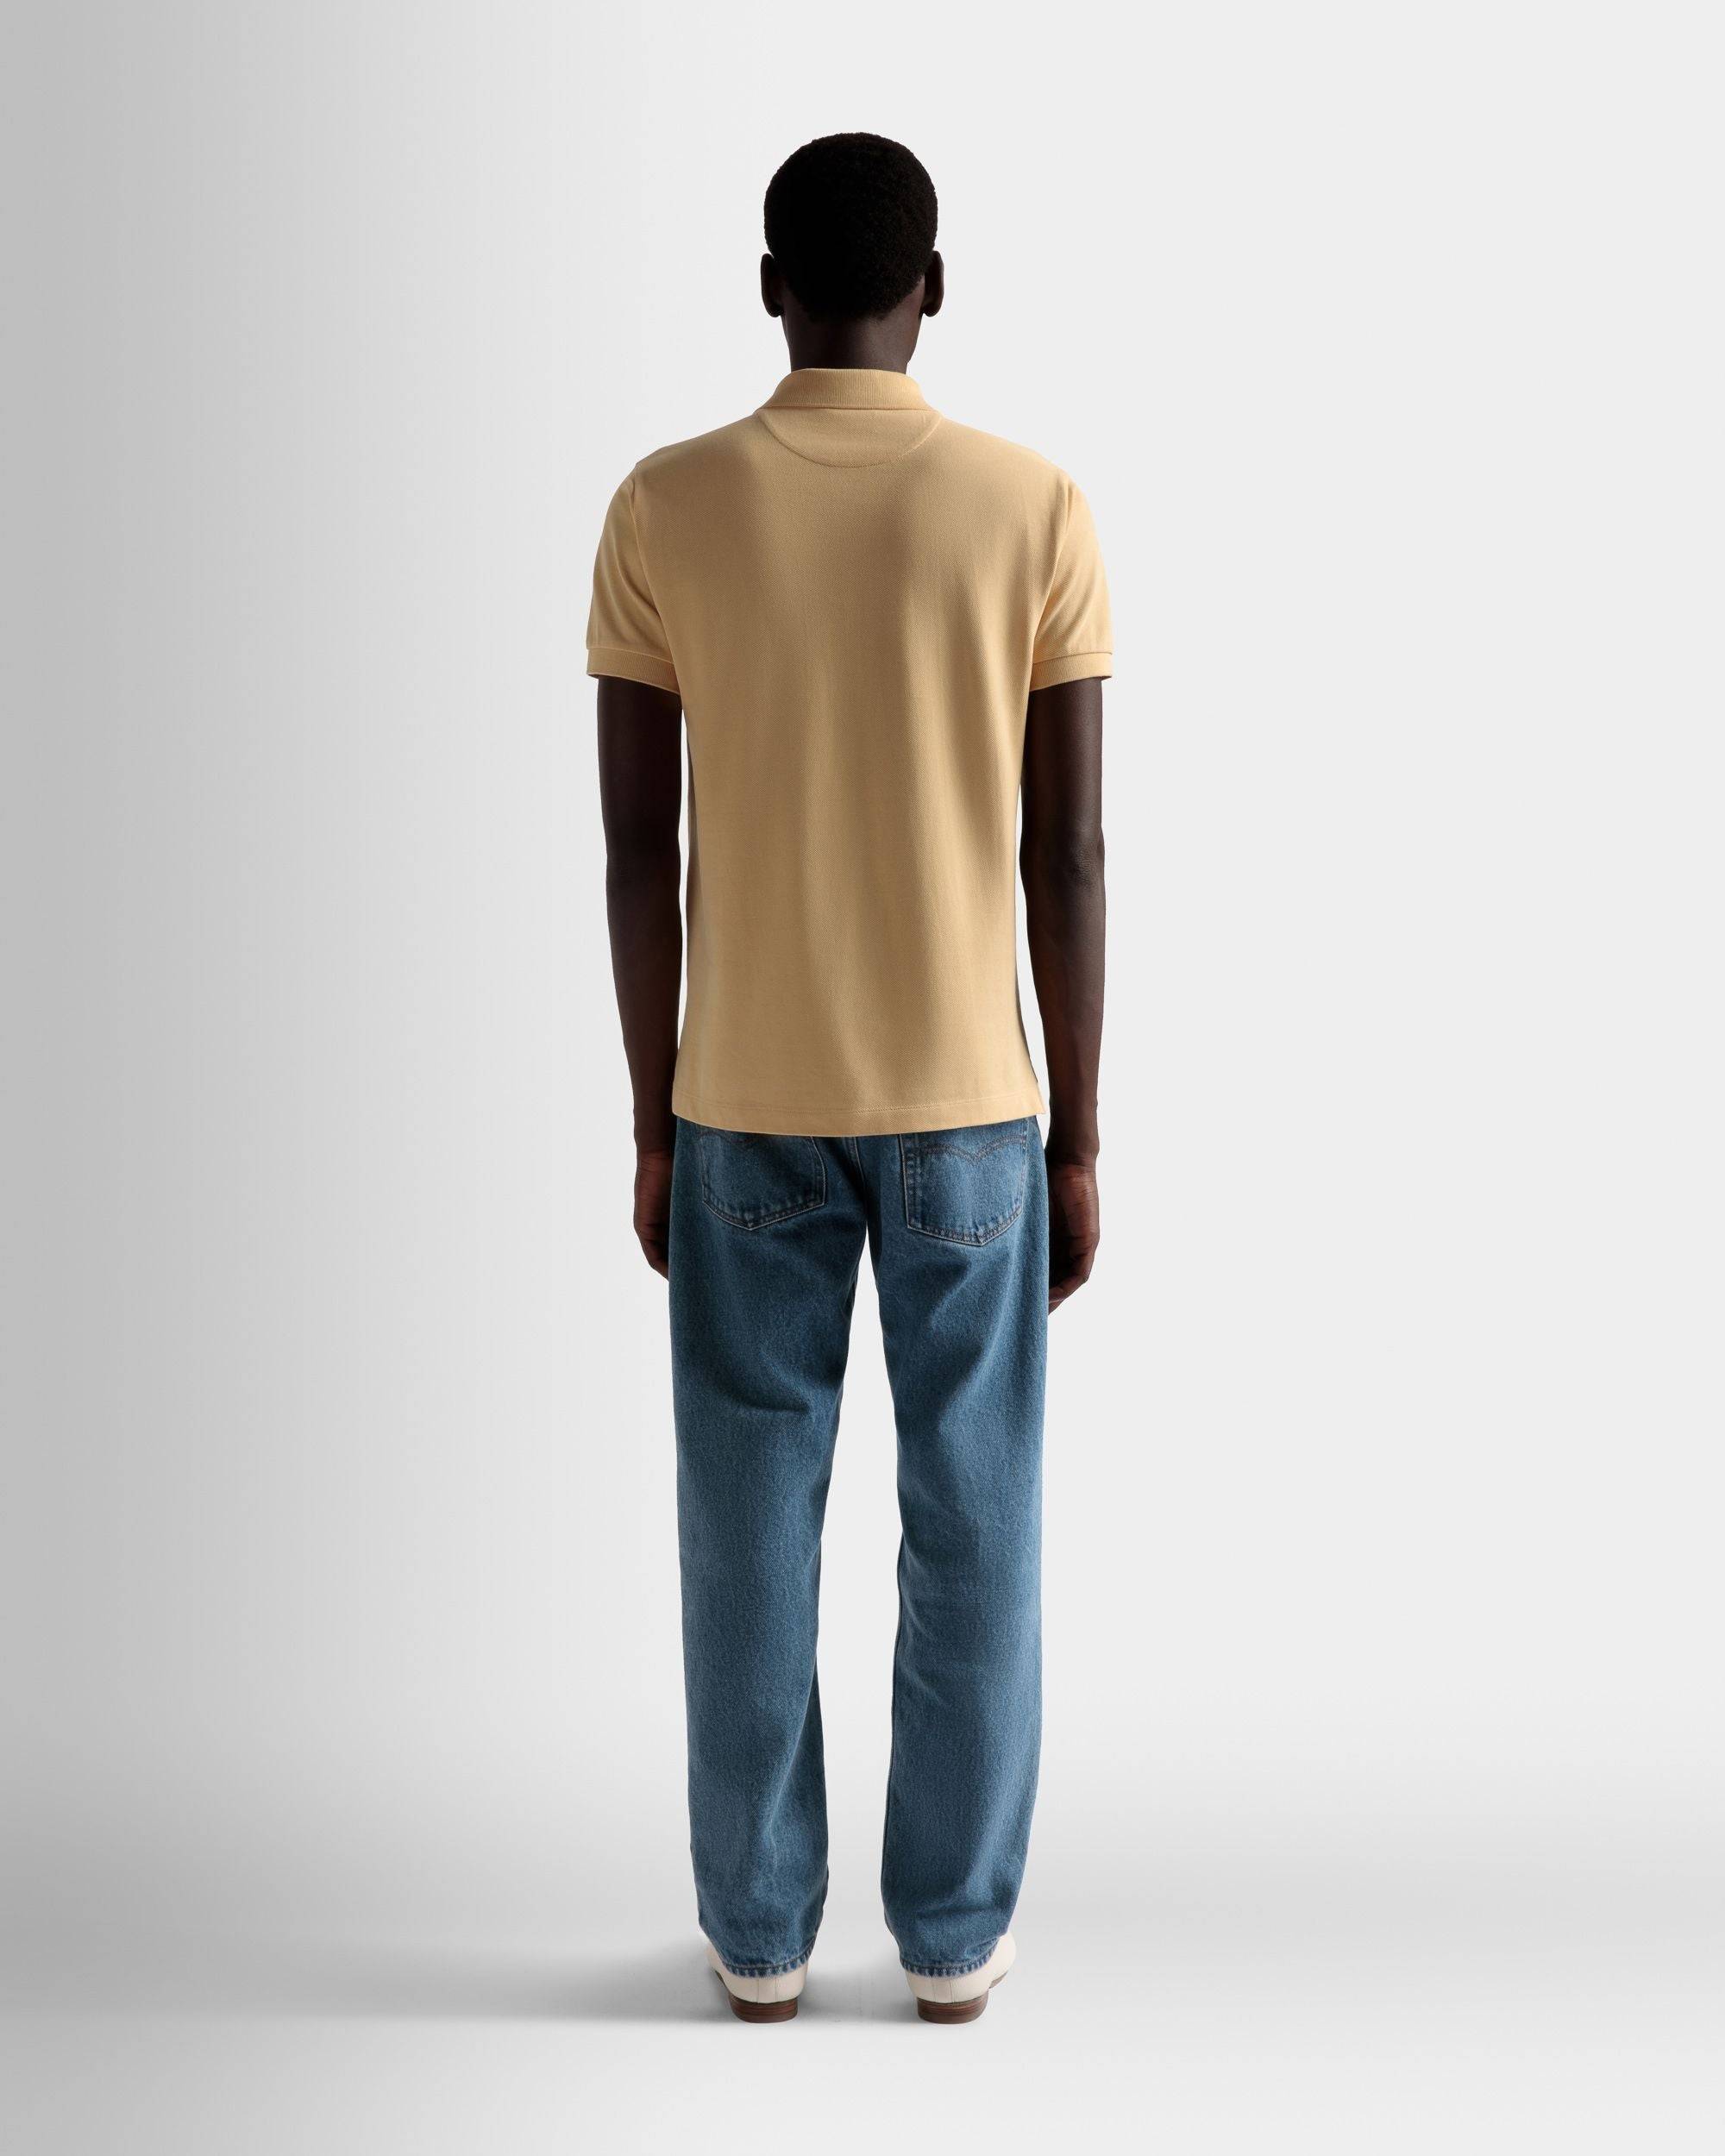 Emblem Poloshirt | Poloshirt für Herren | Cremefarbene Baumwolle | Bally | Model getragen Rückseite